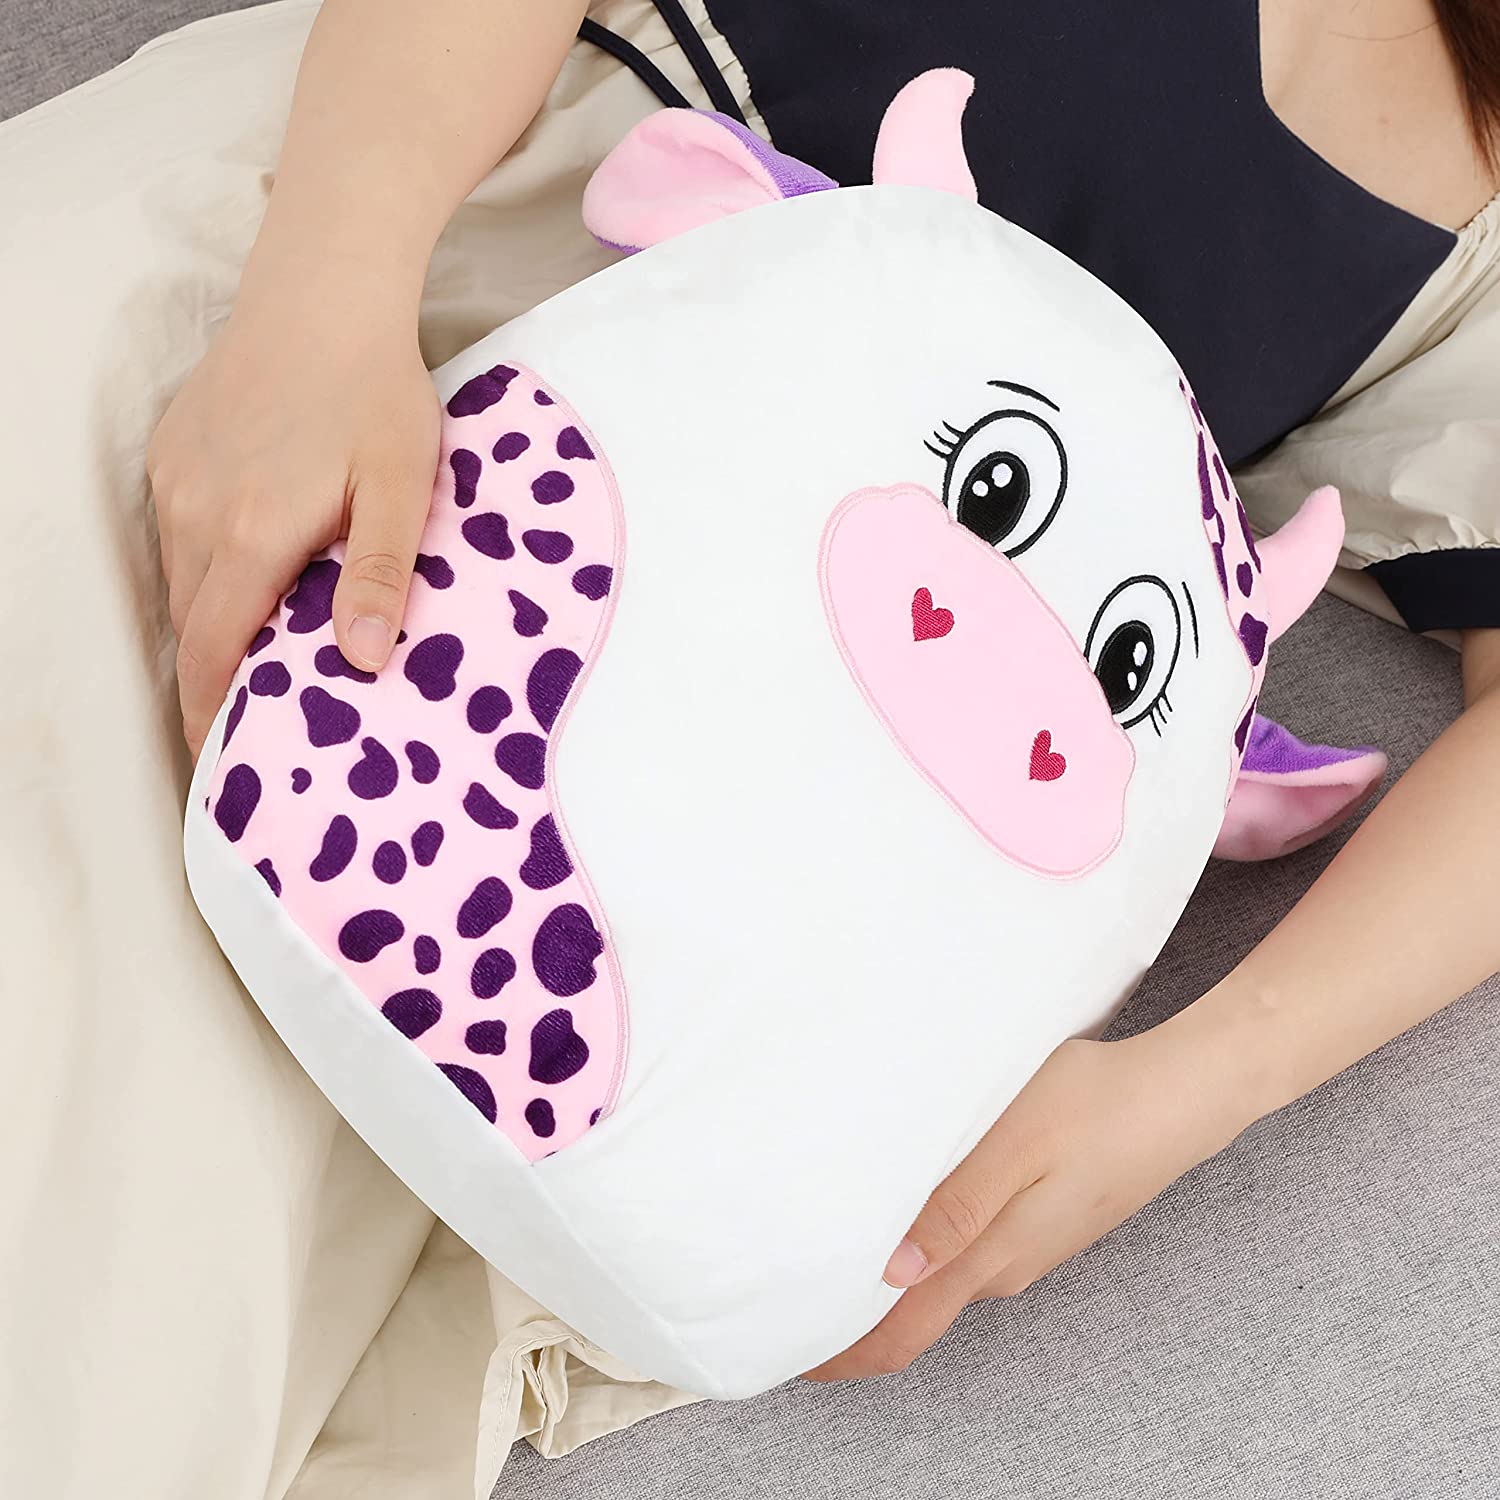 Cow Plush Toy Throw Pillow, 16/20 Inches